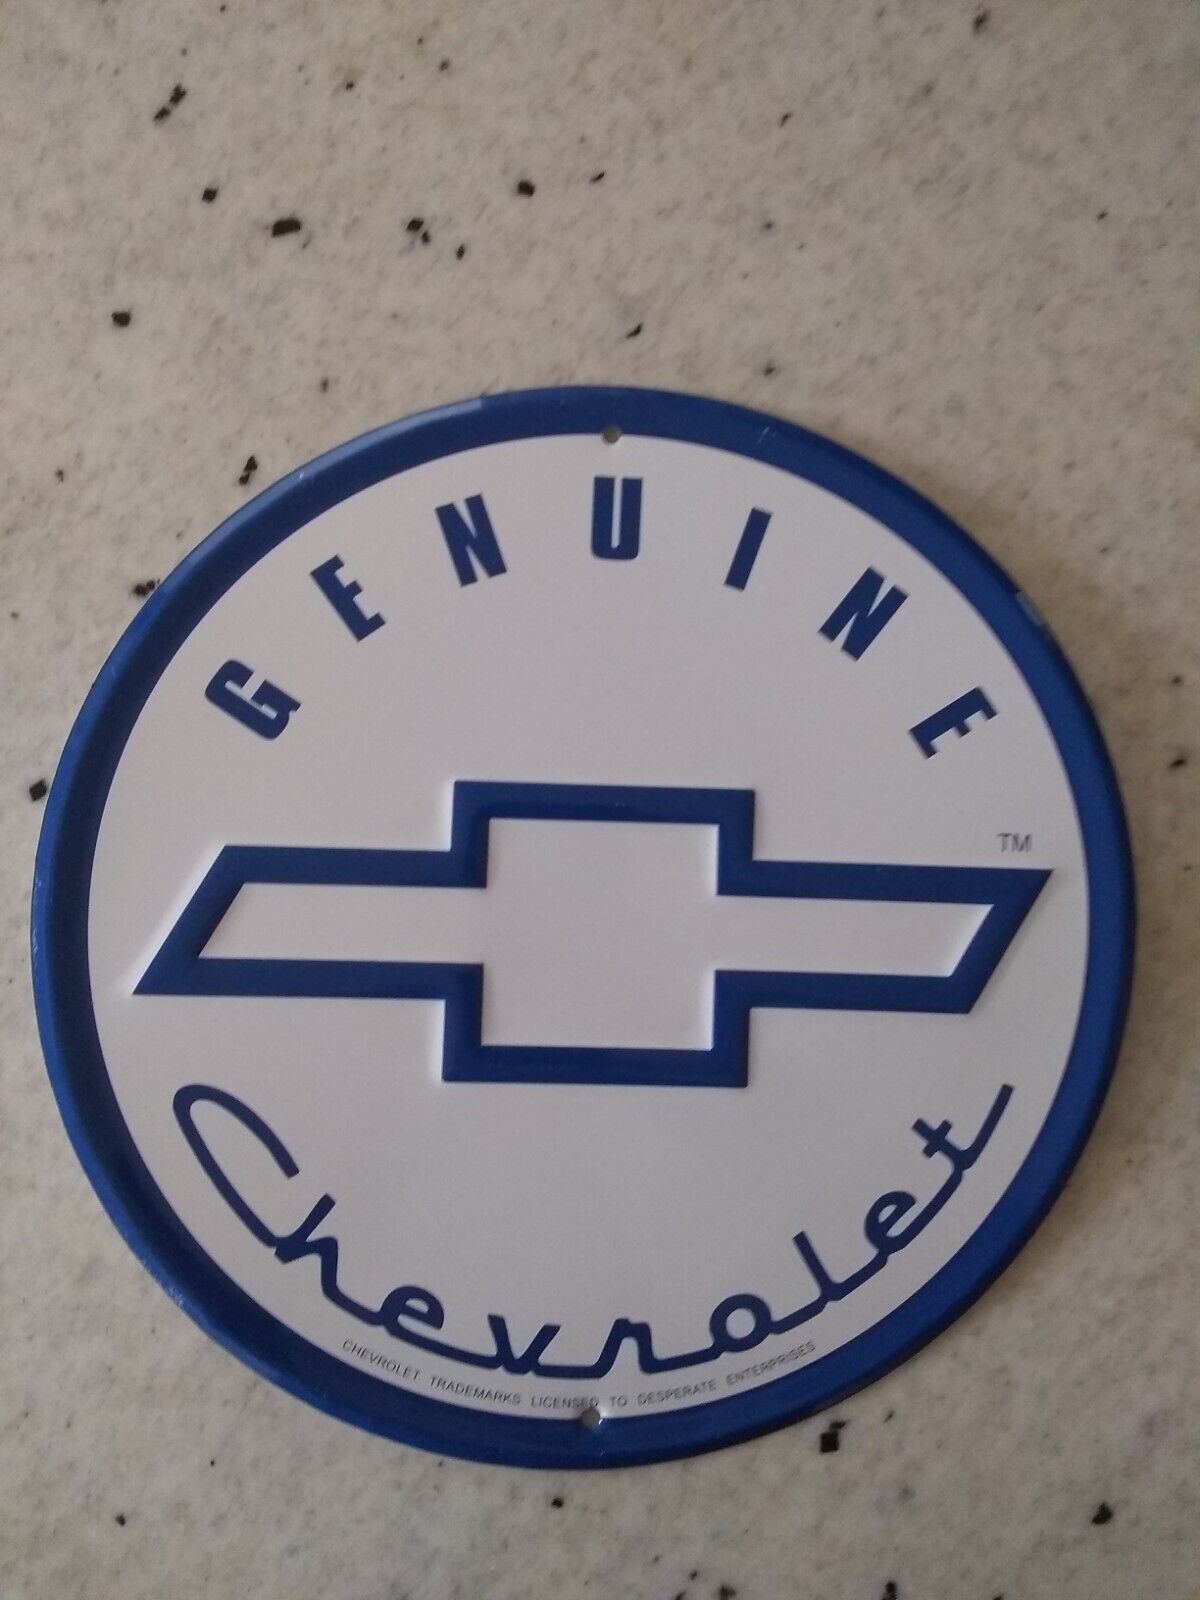 Genuine Chevrolet Service Replica Tin Metal Sign Round Chevy GM Camaro Chevelle